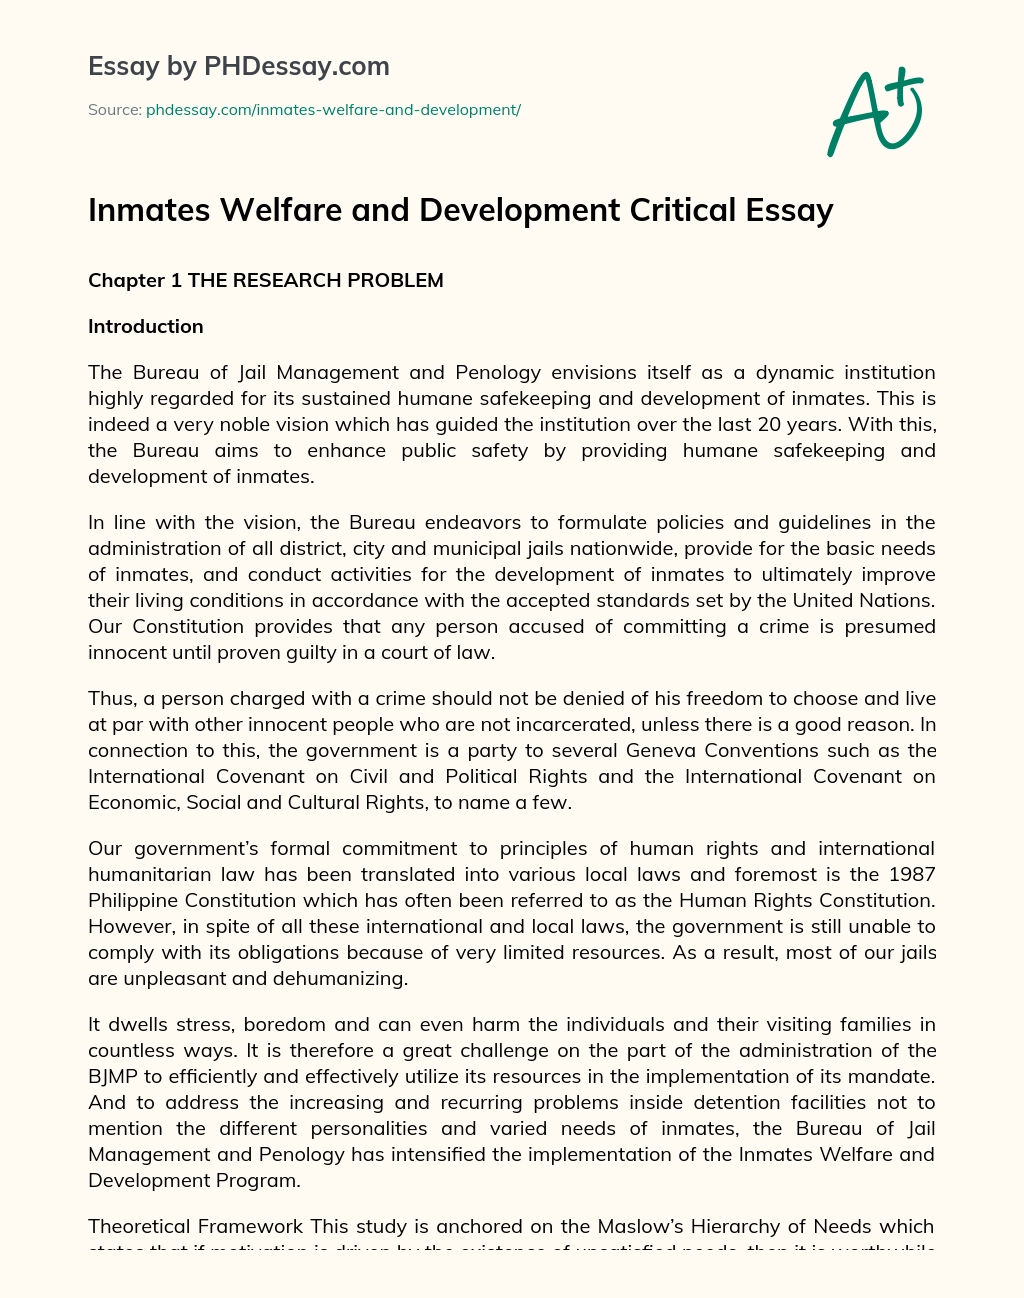 Inmates Welfare and Development Critical Essay essay